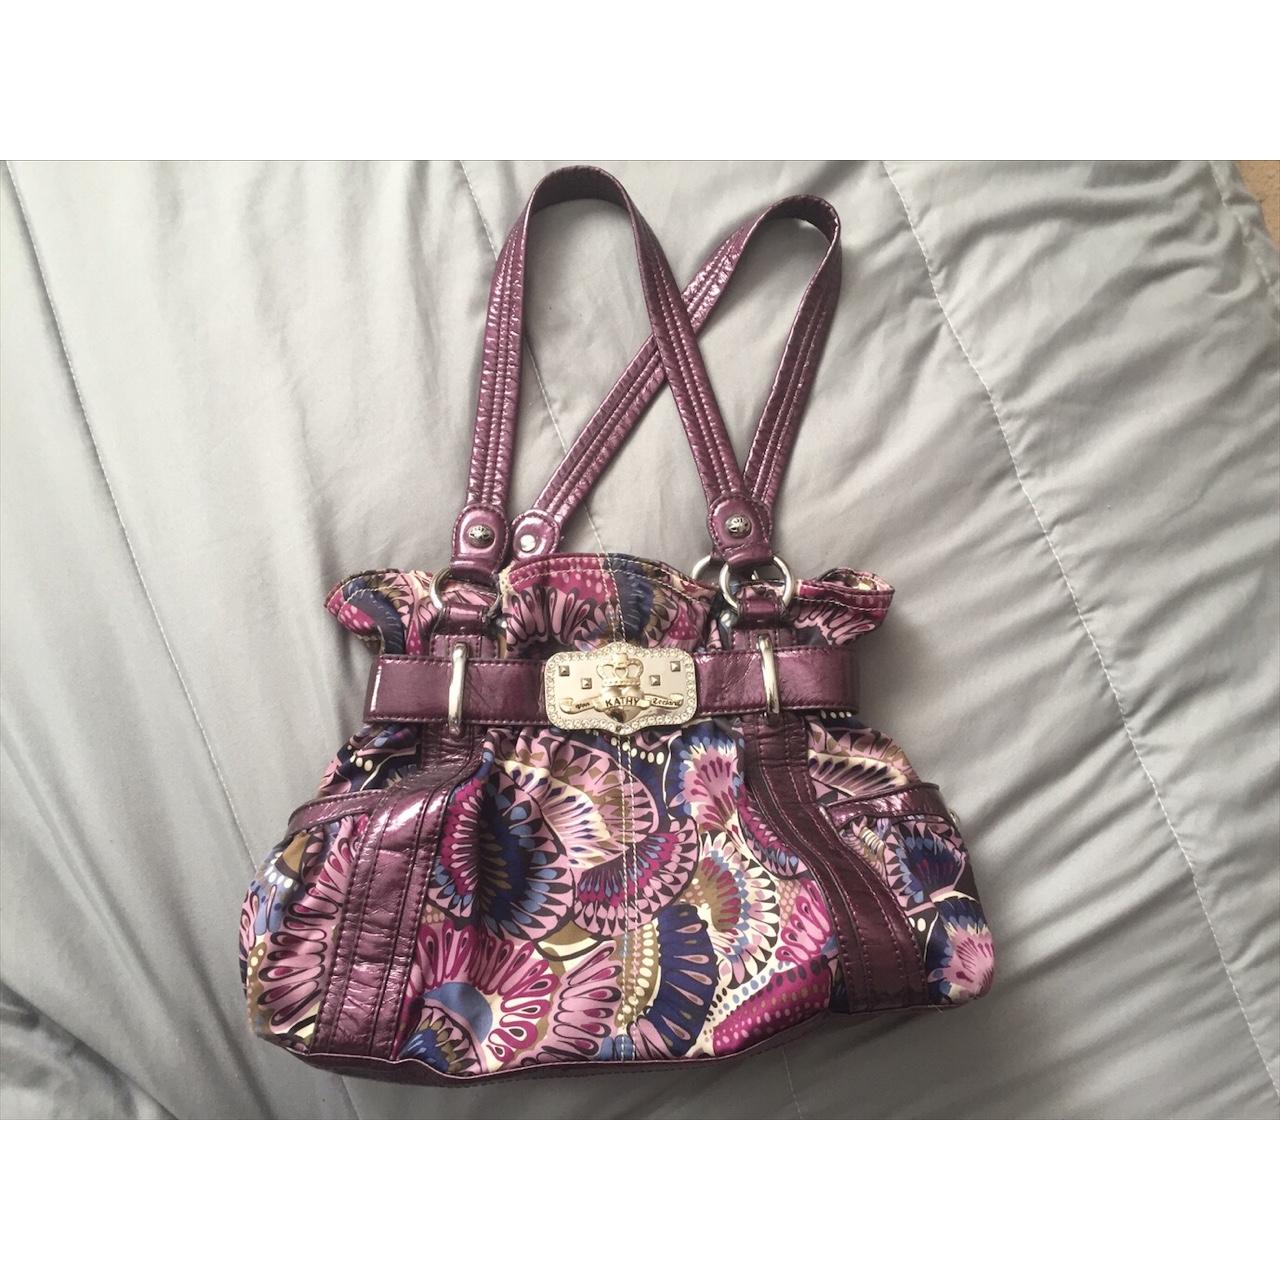 👾⛓️Vintage Kathy Van Zeeland purple handbag Popular... - Depop